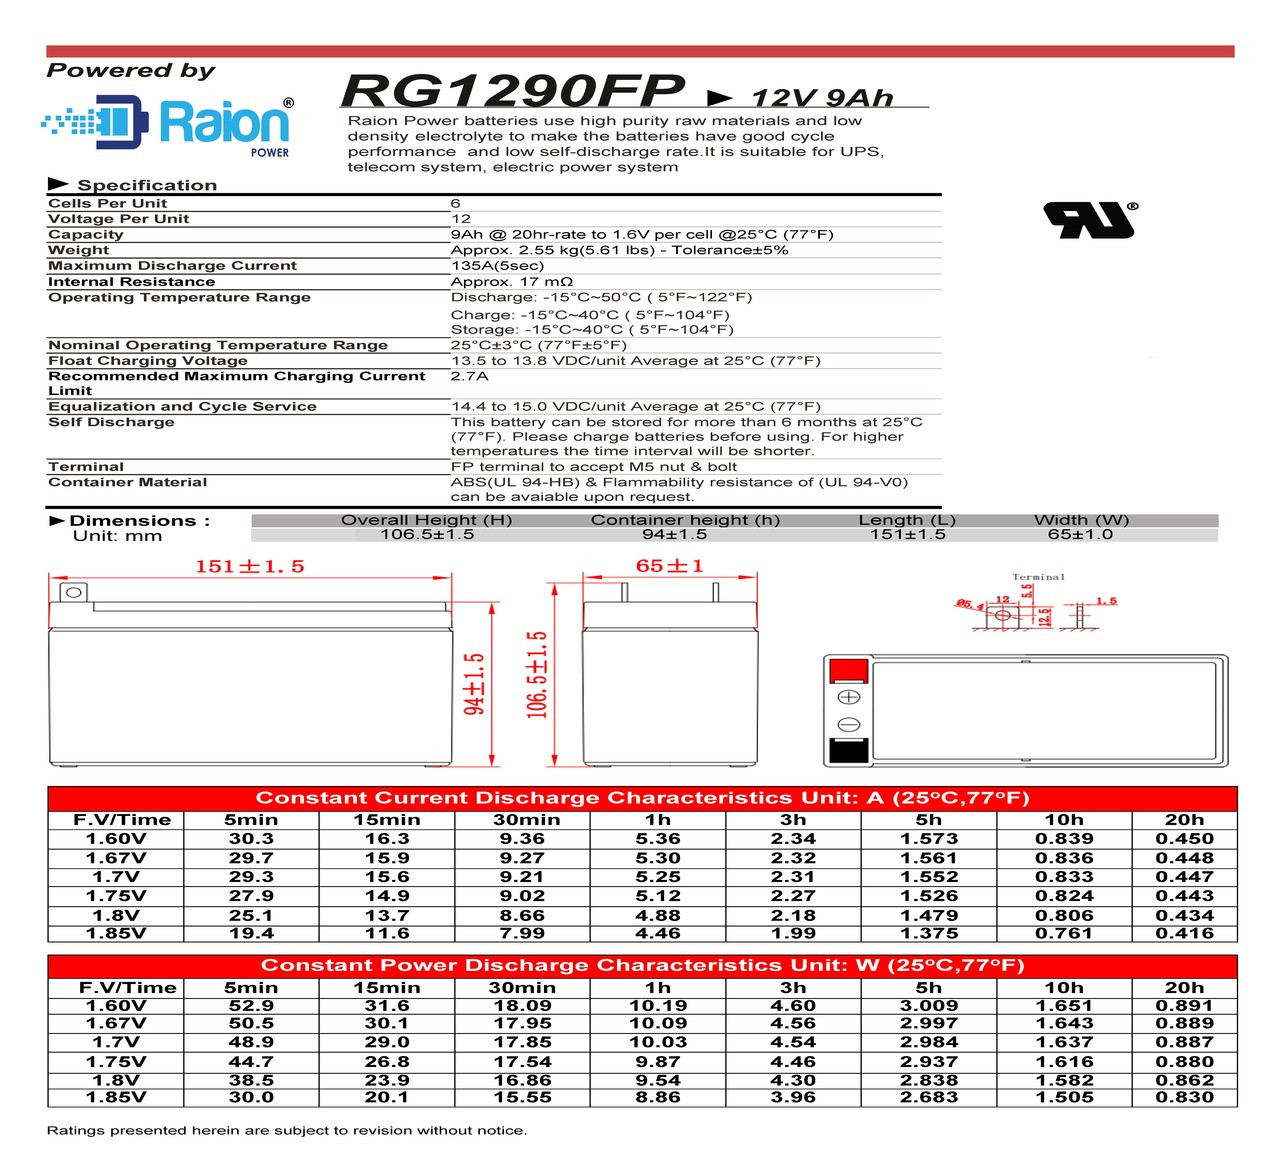 Raion Power 12V 9Ah Battery Data Sheet for Diehard DH-9-J